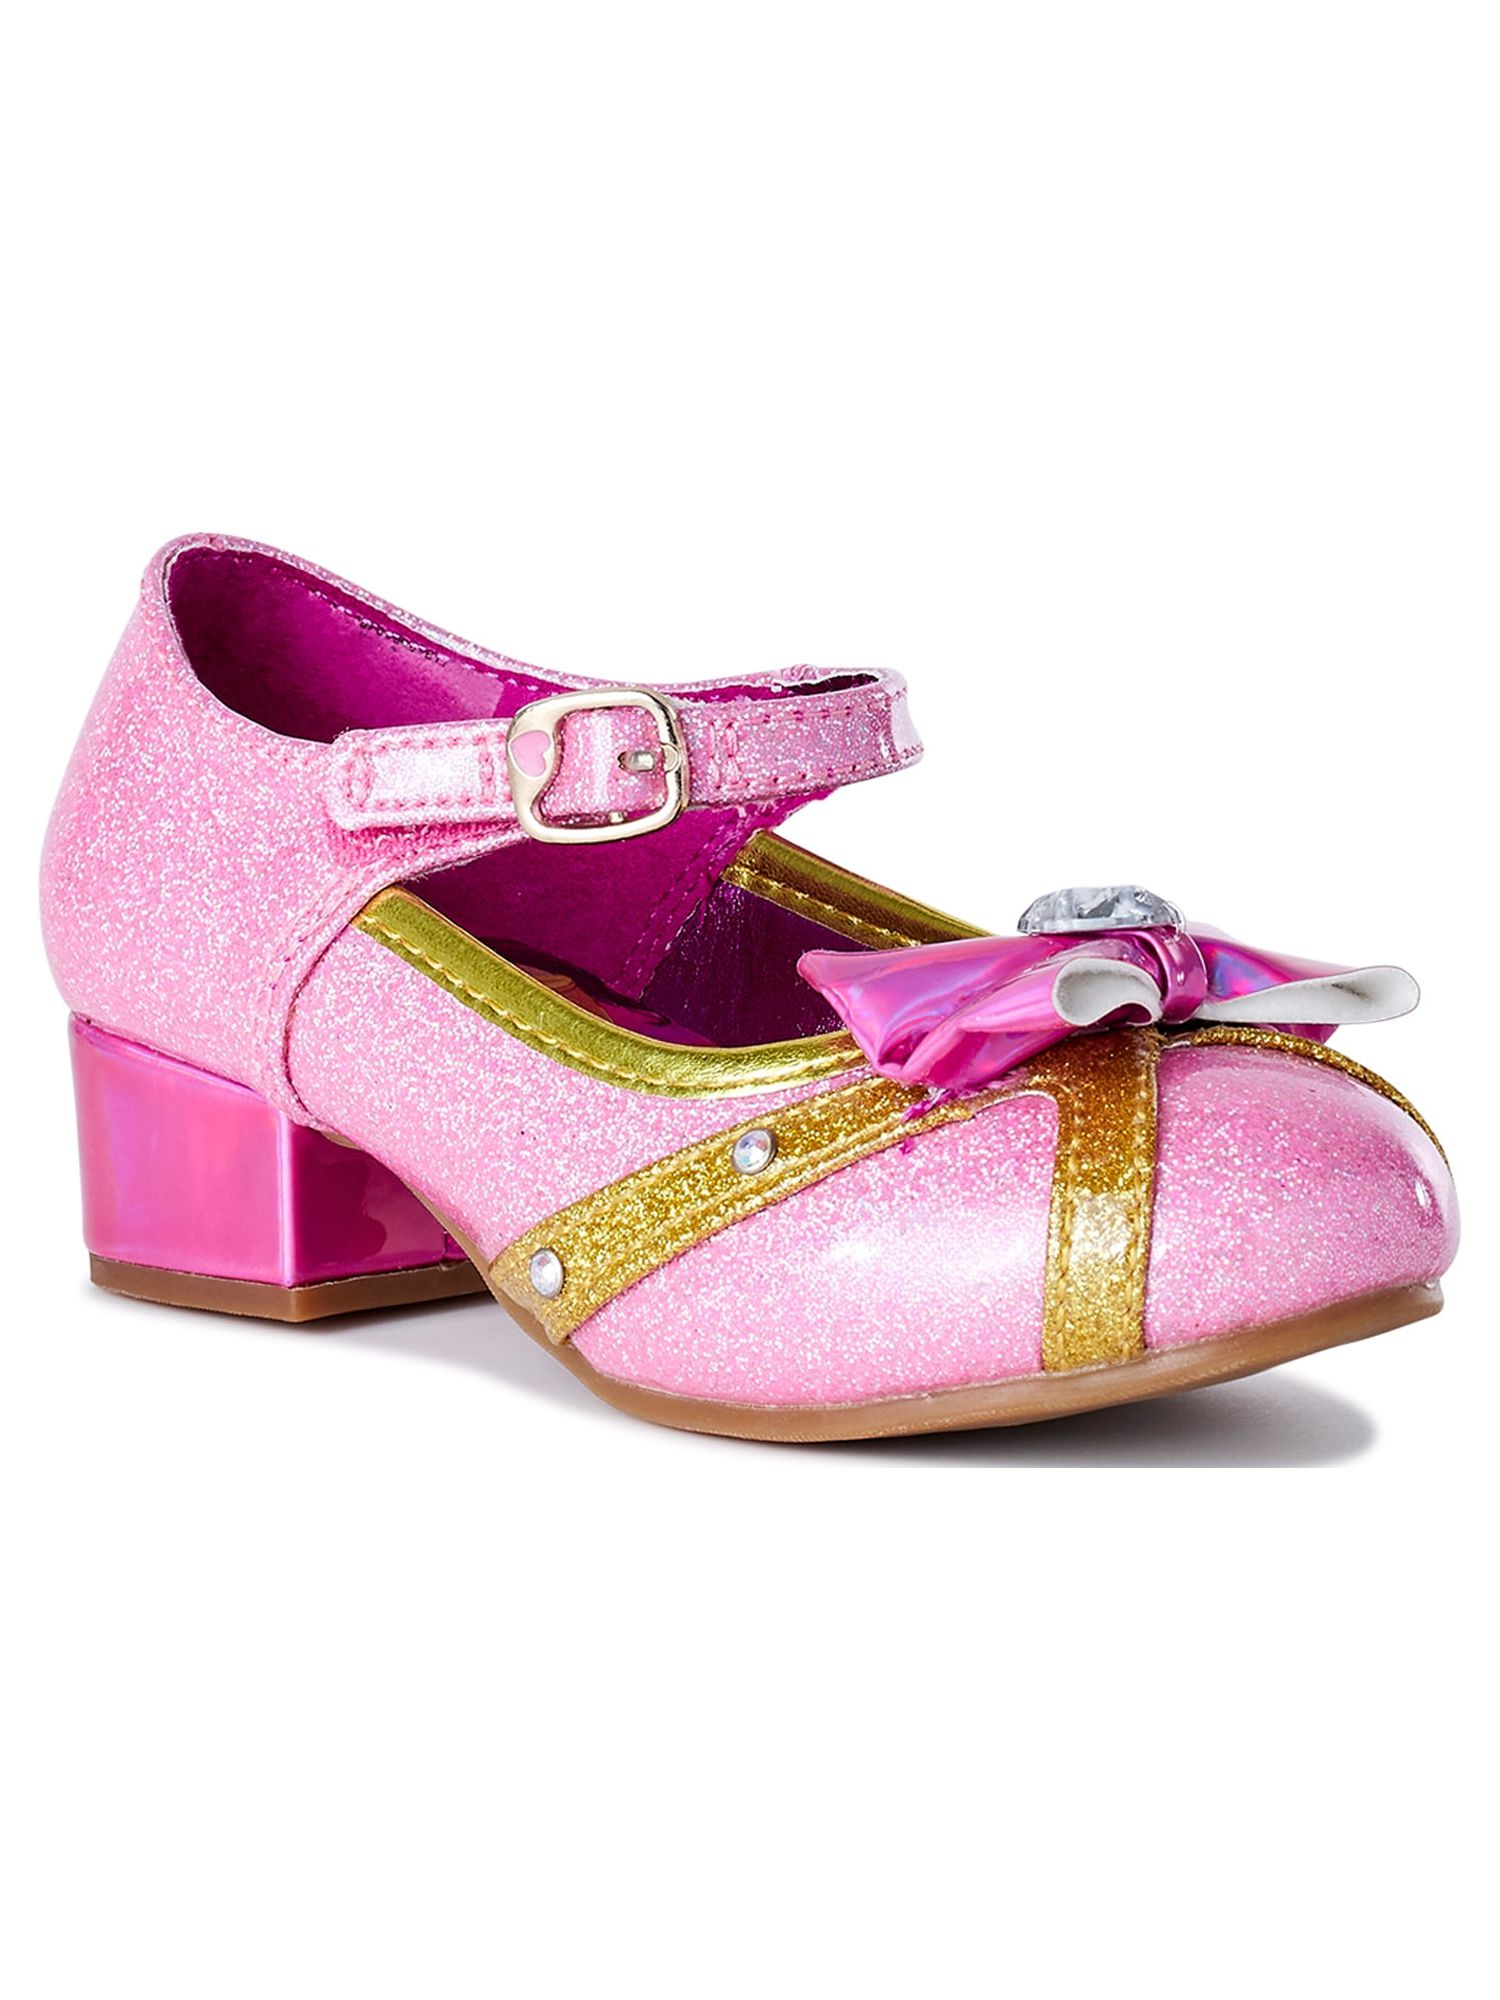 Disney Princess Toddler Girl Low Heel Dress Up Shoes - image 1 of 3